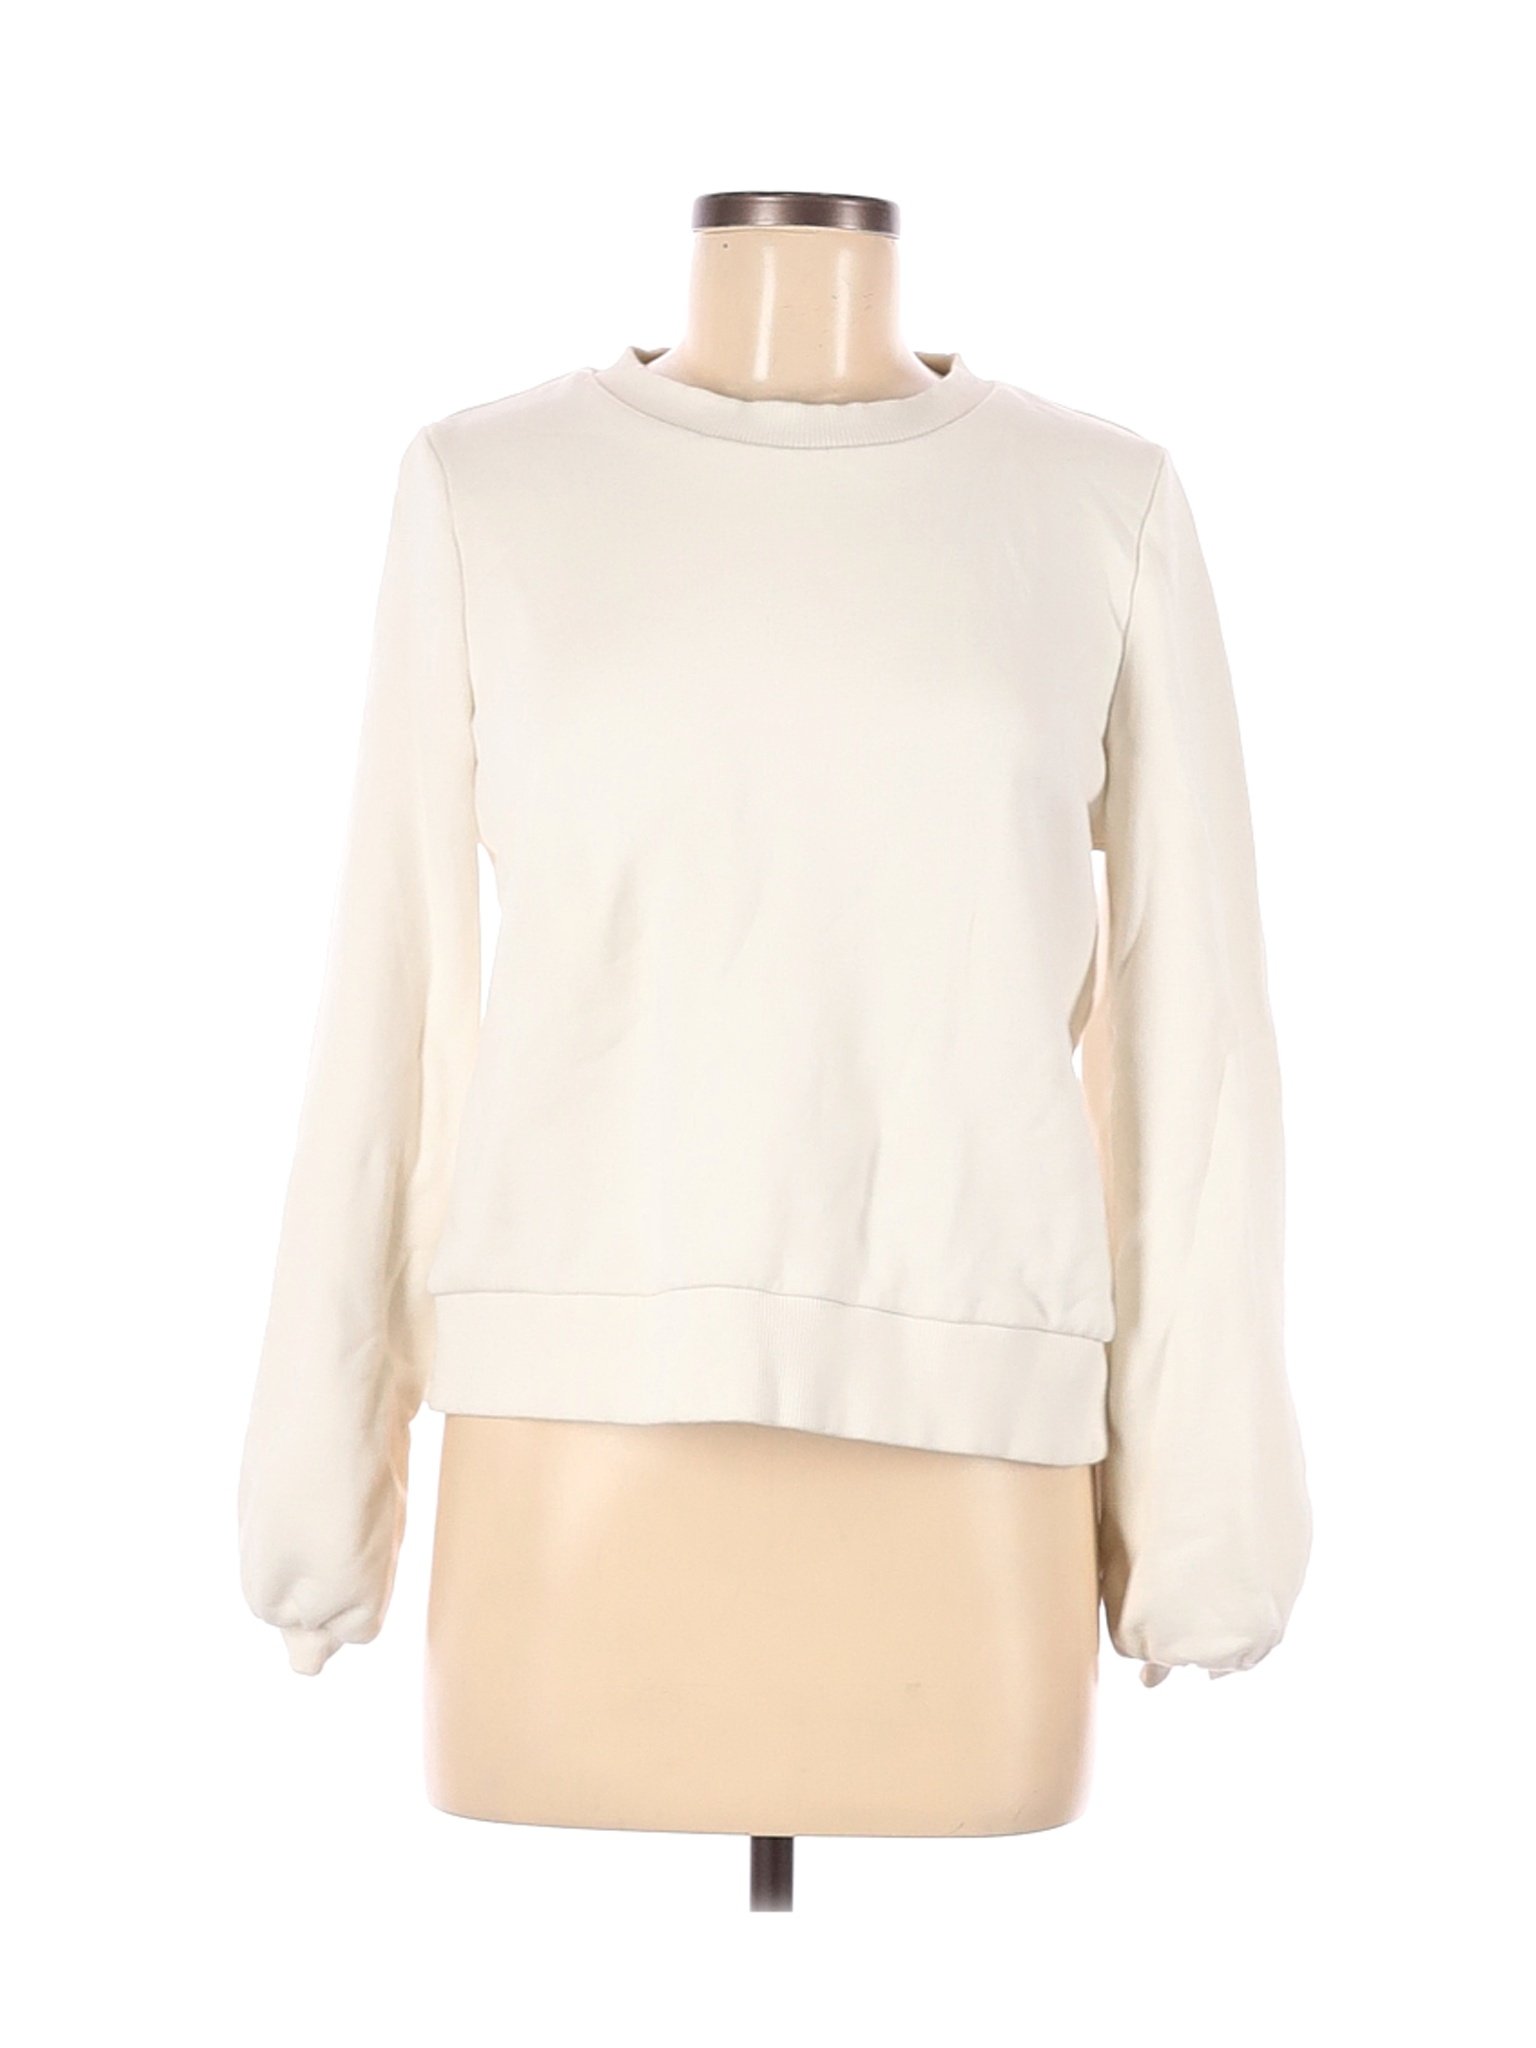 A New Day Women Ivory Sweatshirt M | eBay